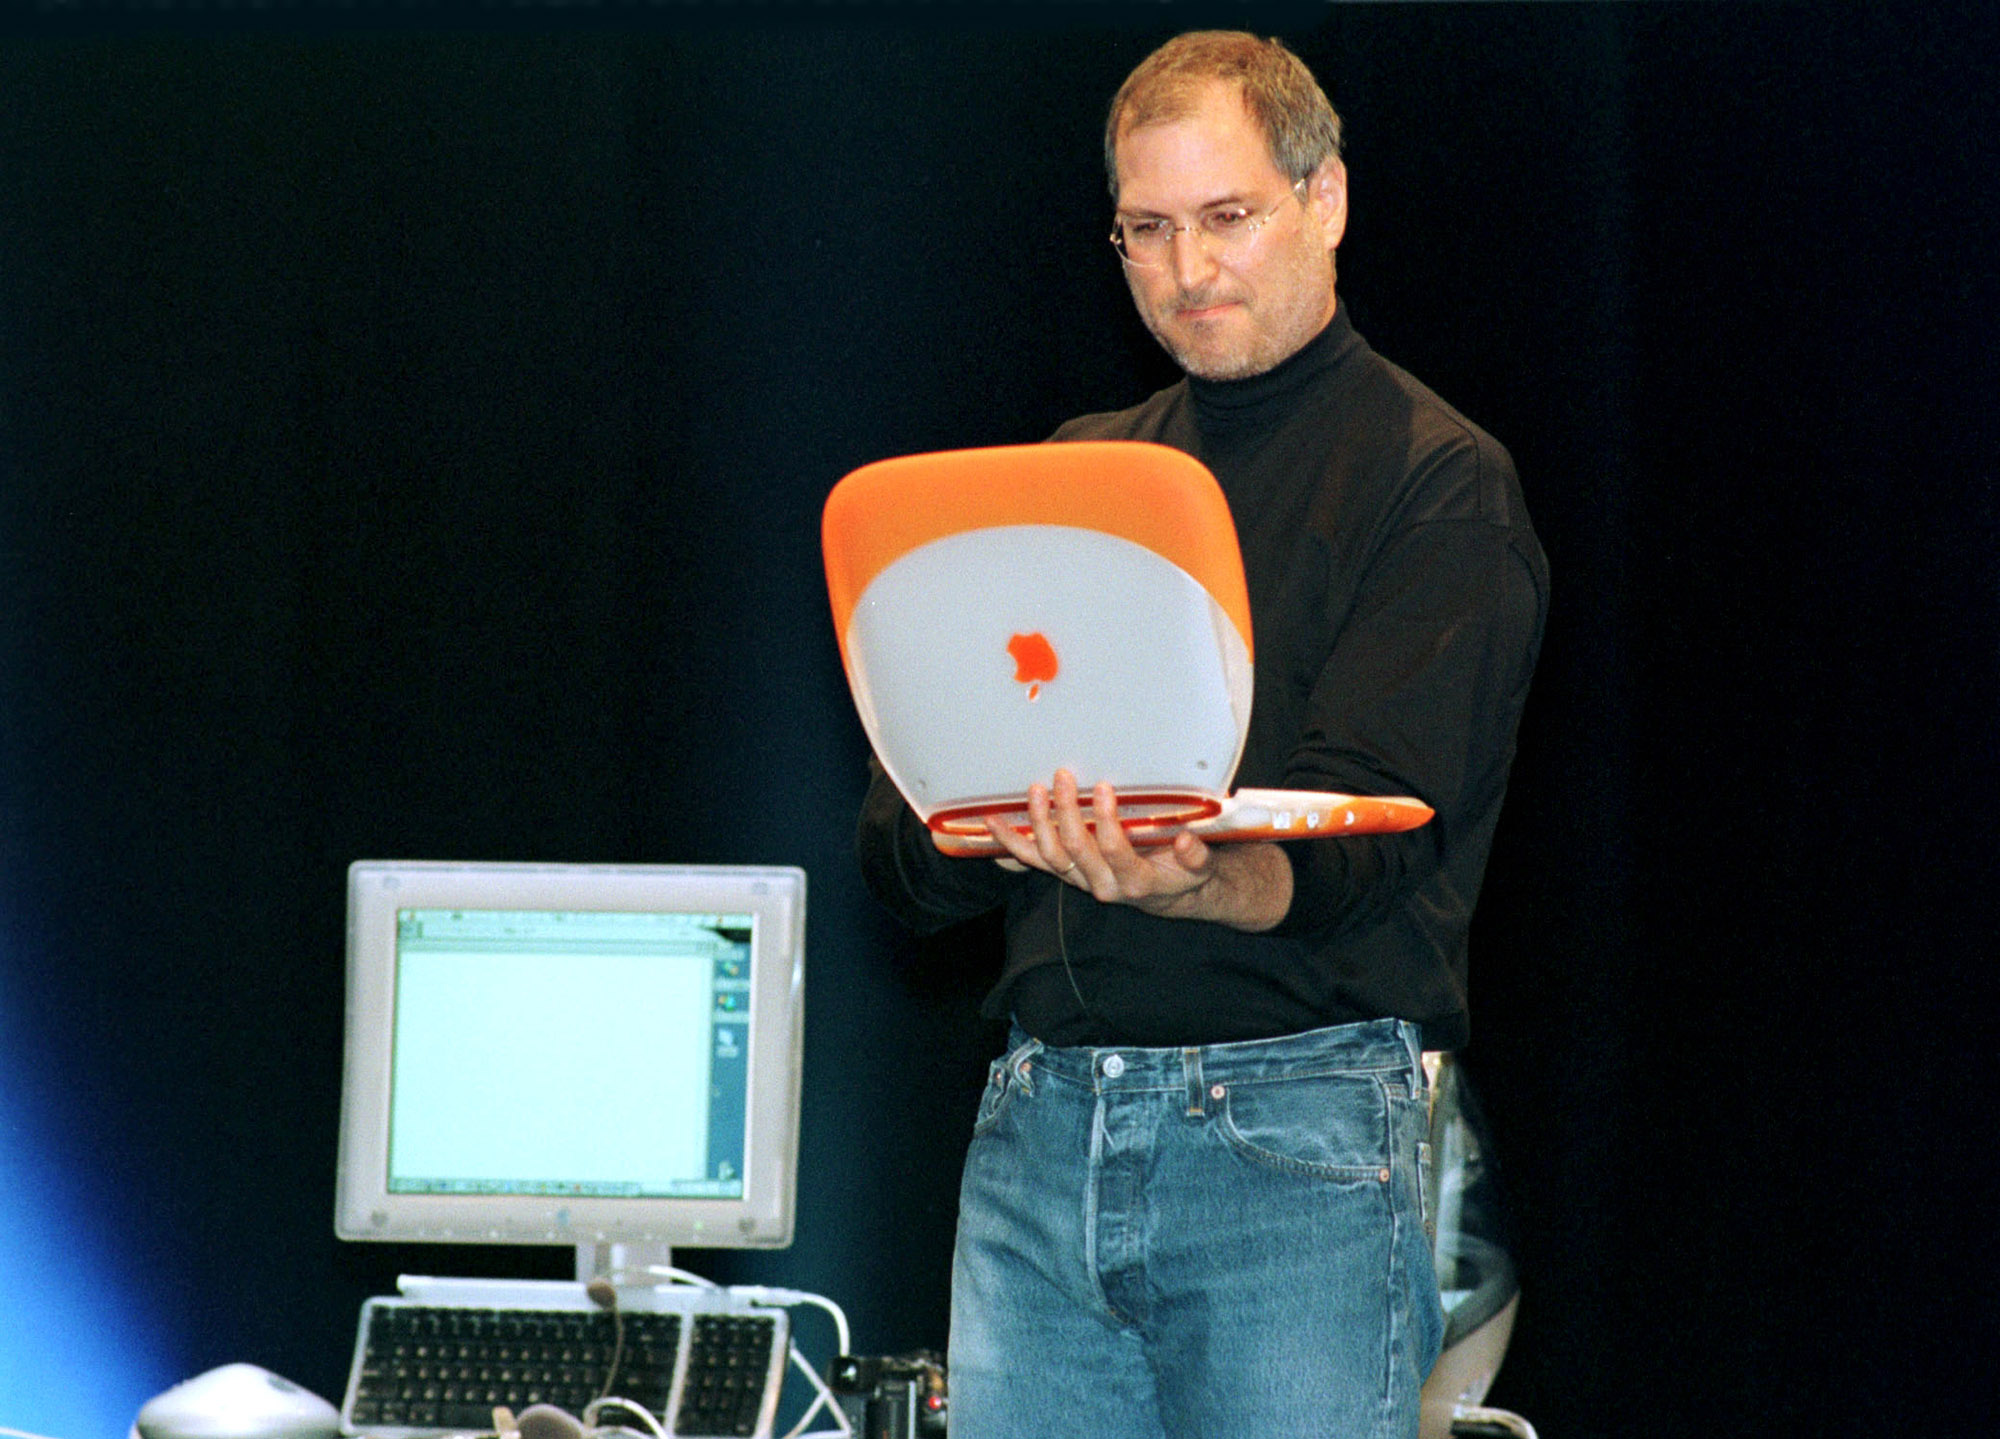 Steve Jobs at holding an orange iBook Macworld Expo In Tokyo, Japan On February 16, 2000.